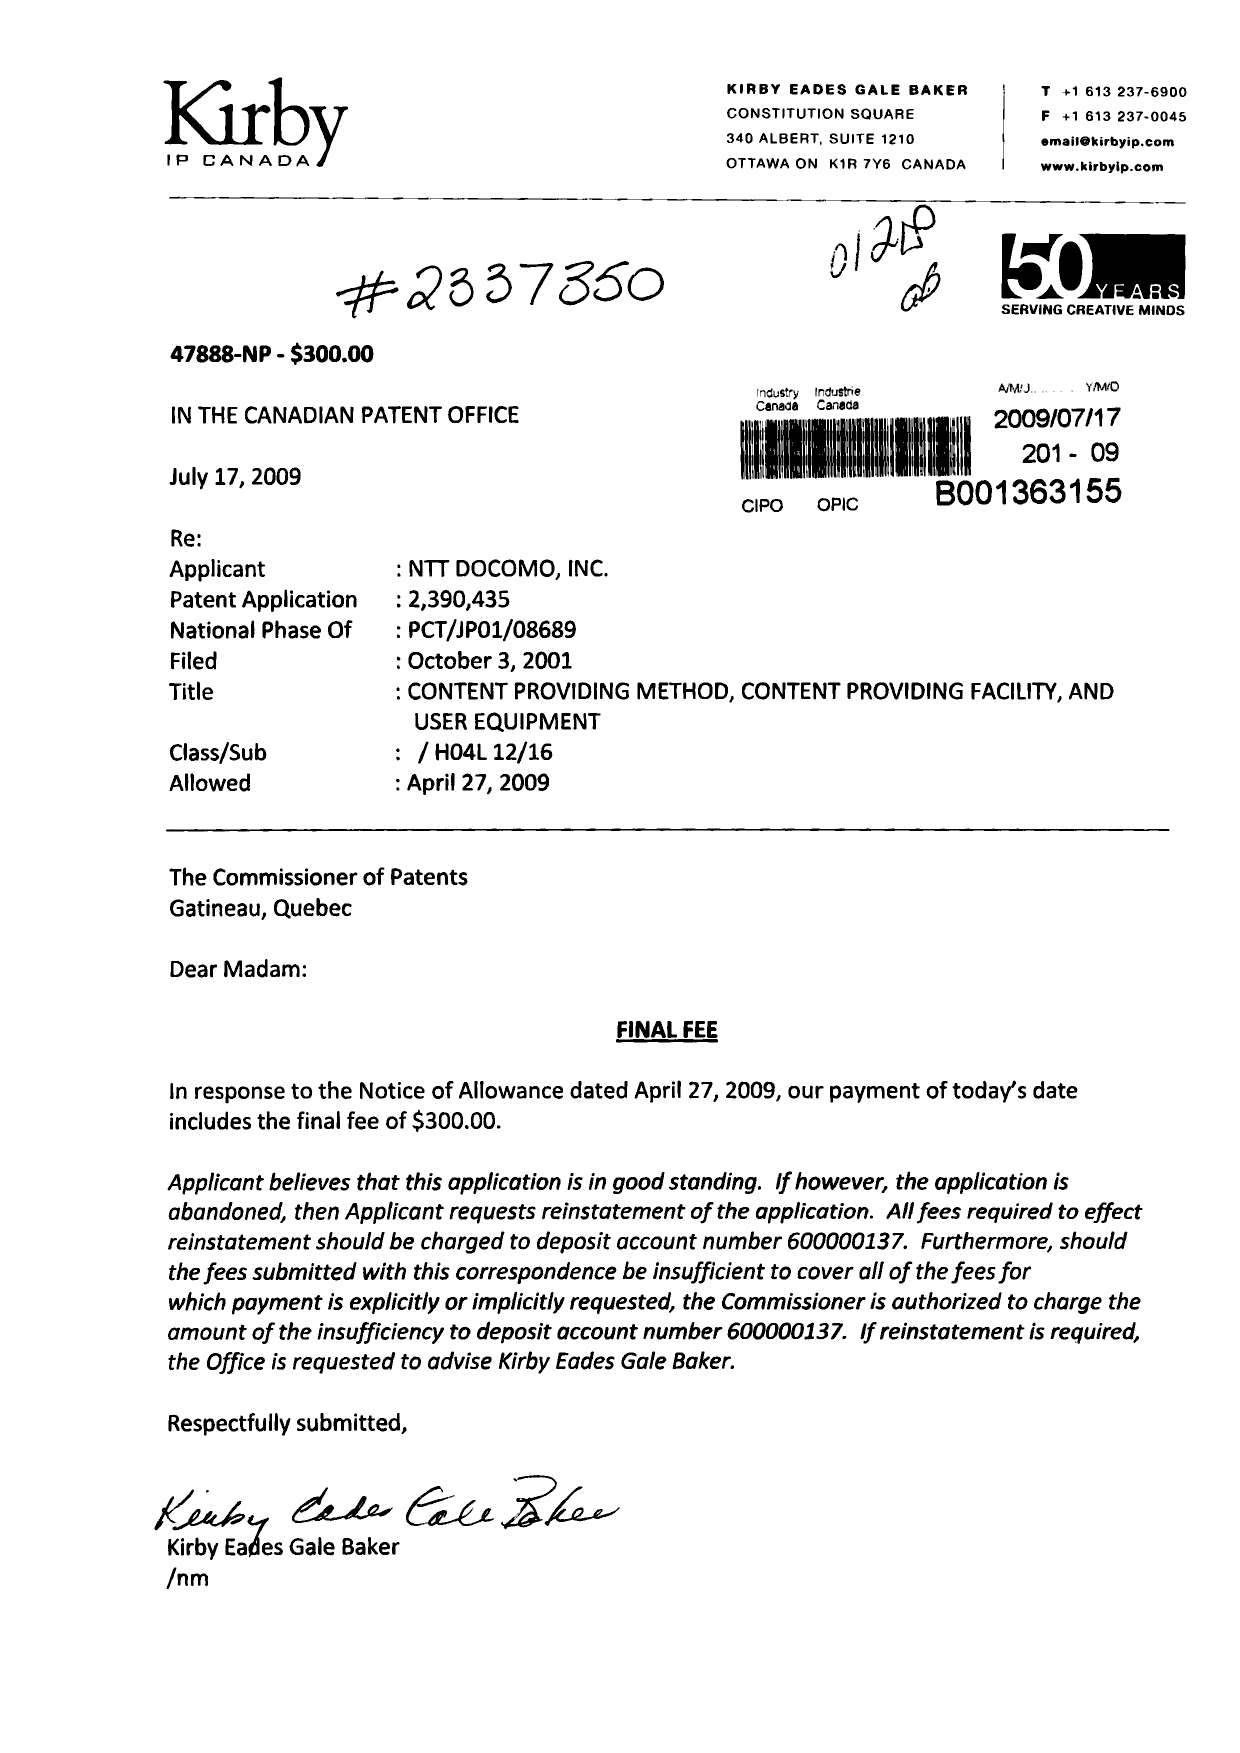 Canadian Patent Document 2390435. Correspondence 20081217. Image 1 of 1